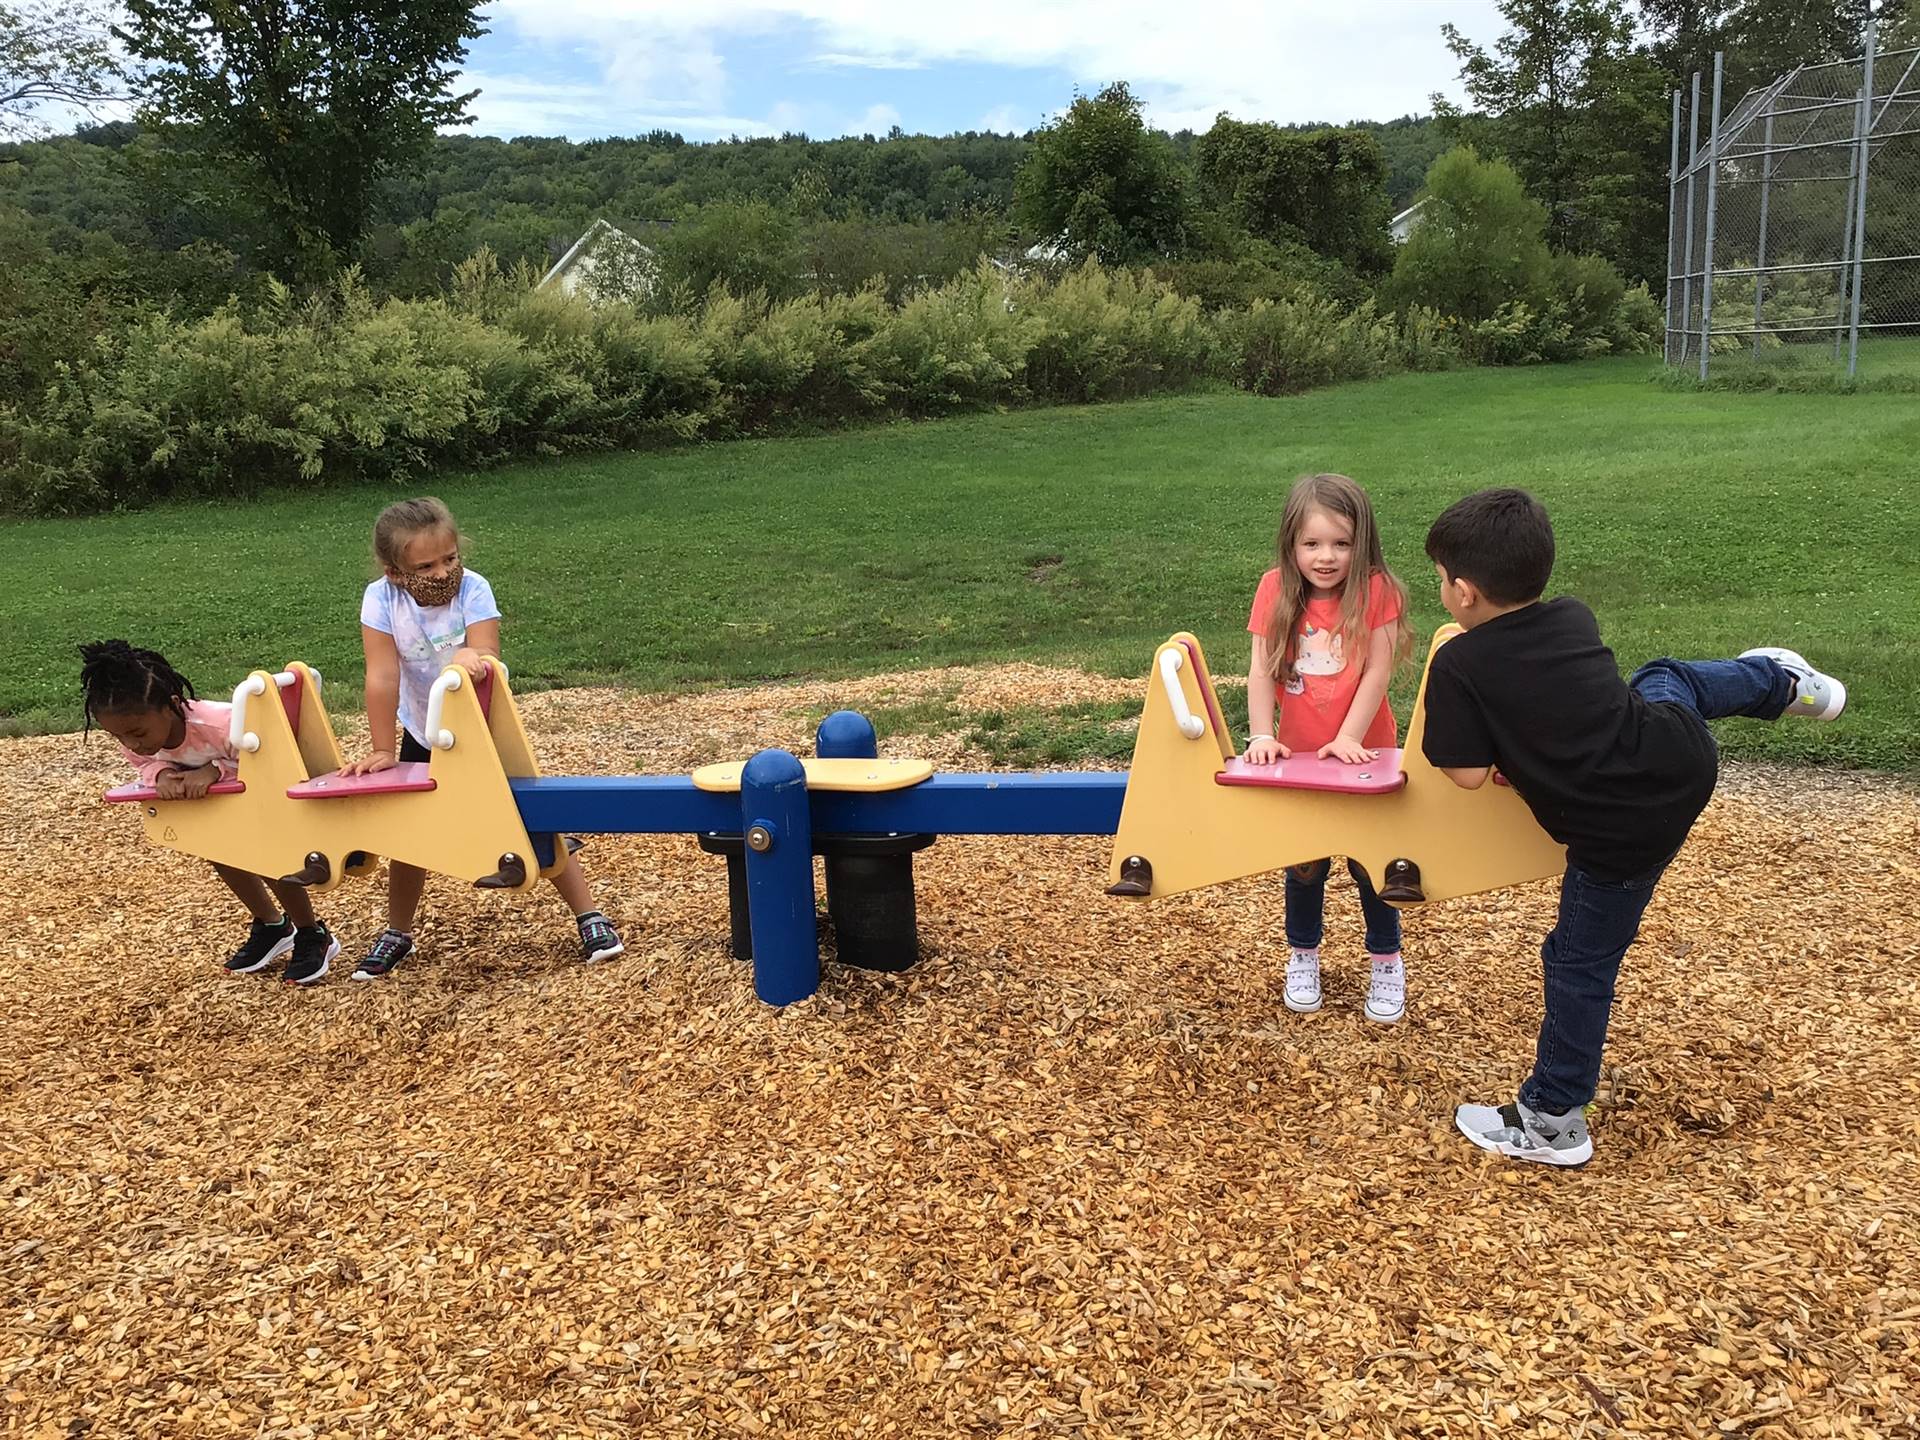 students on playground